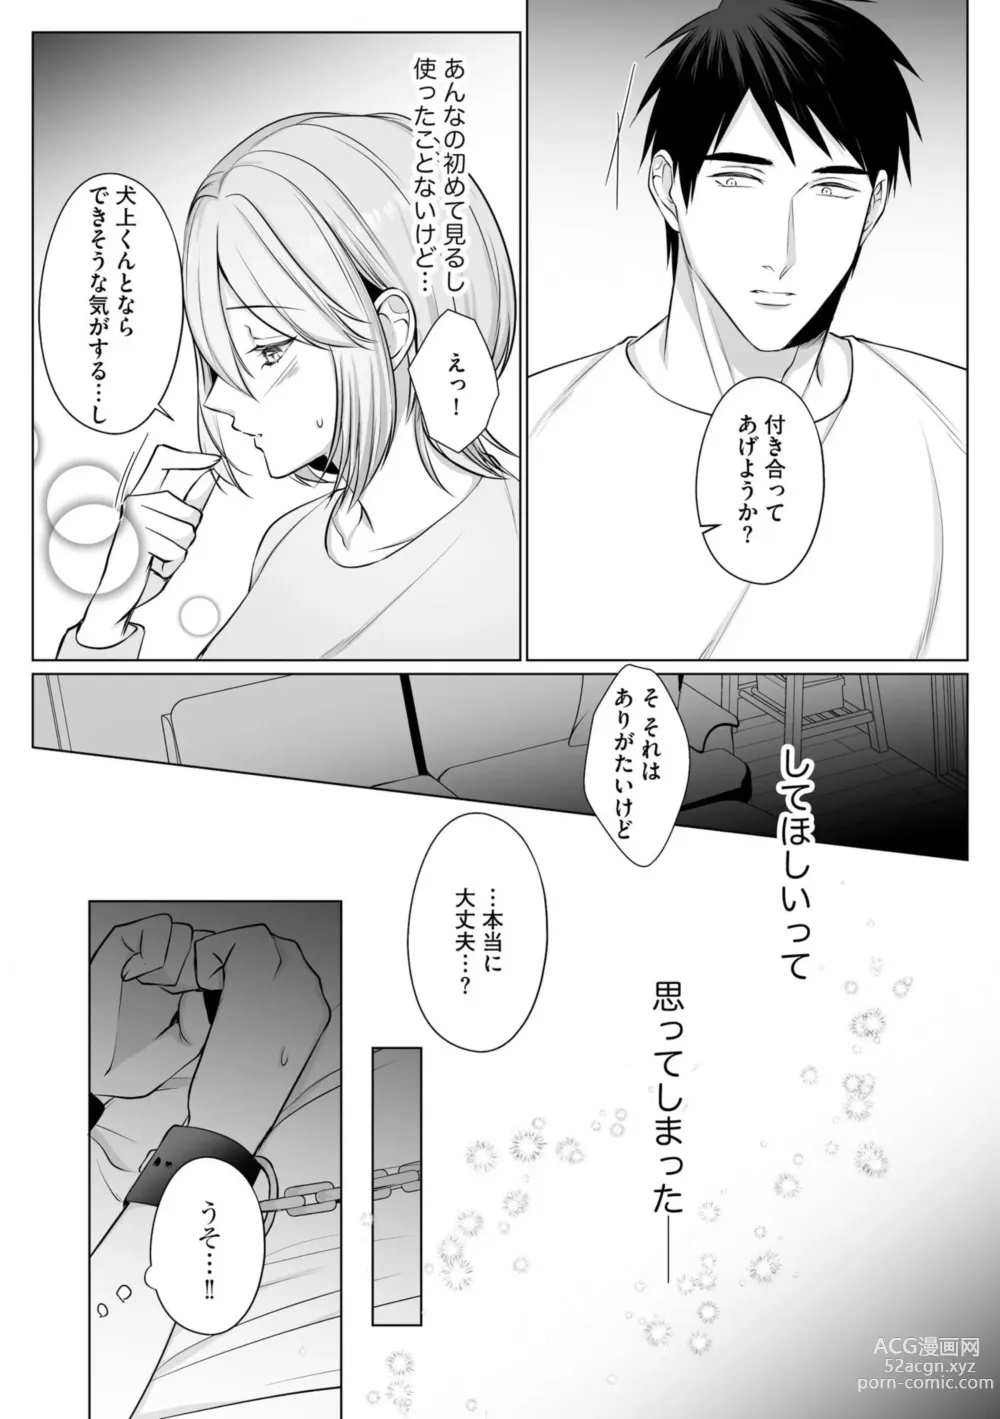 Page 10 of manga Sawayaka Wanko na Koibito wa Sugoteku AV Danyuu!! 6